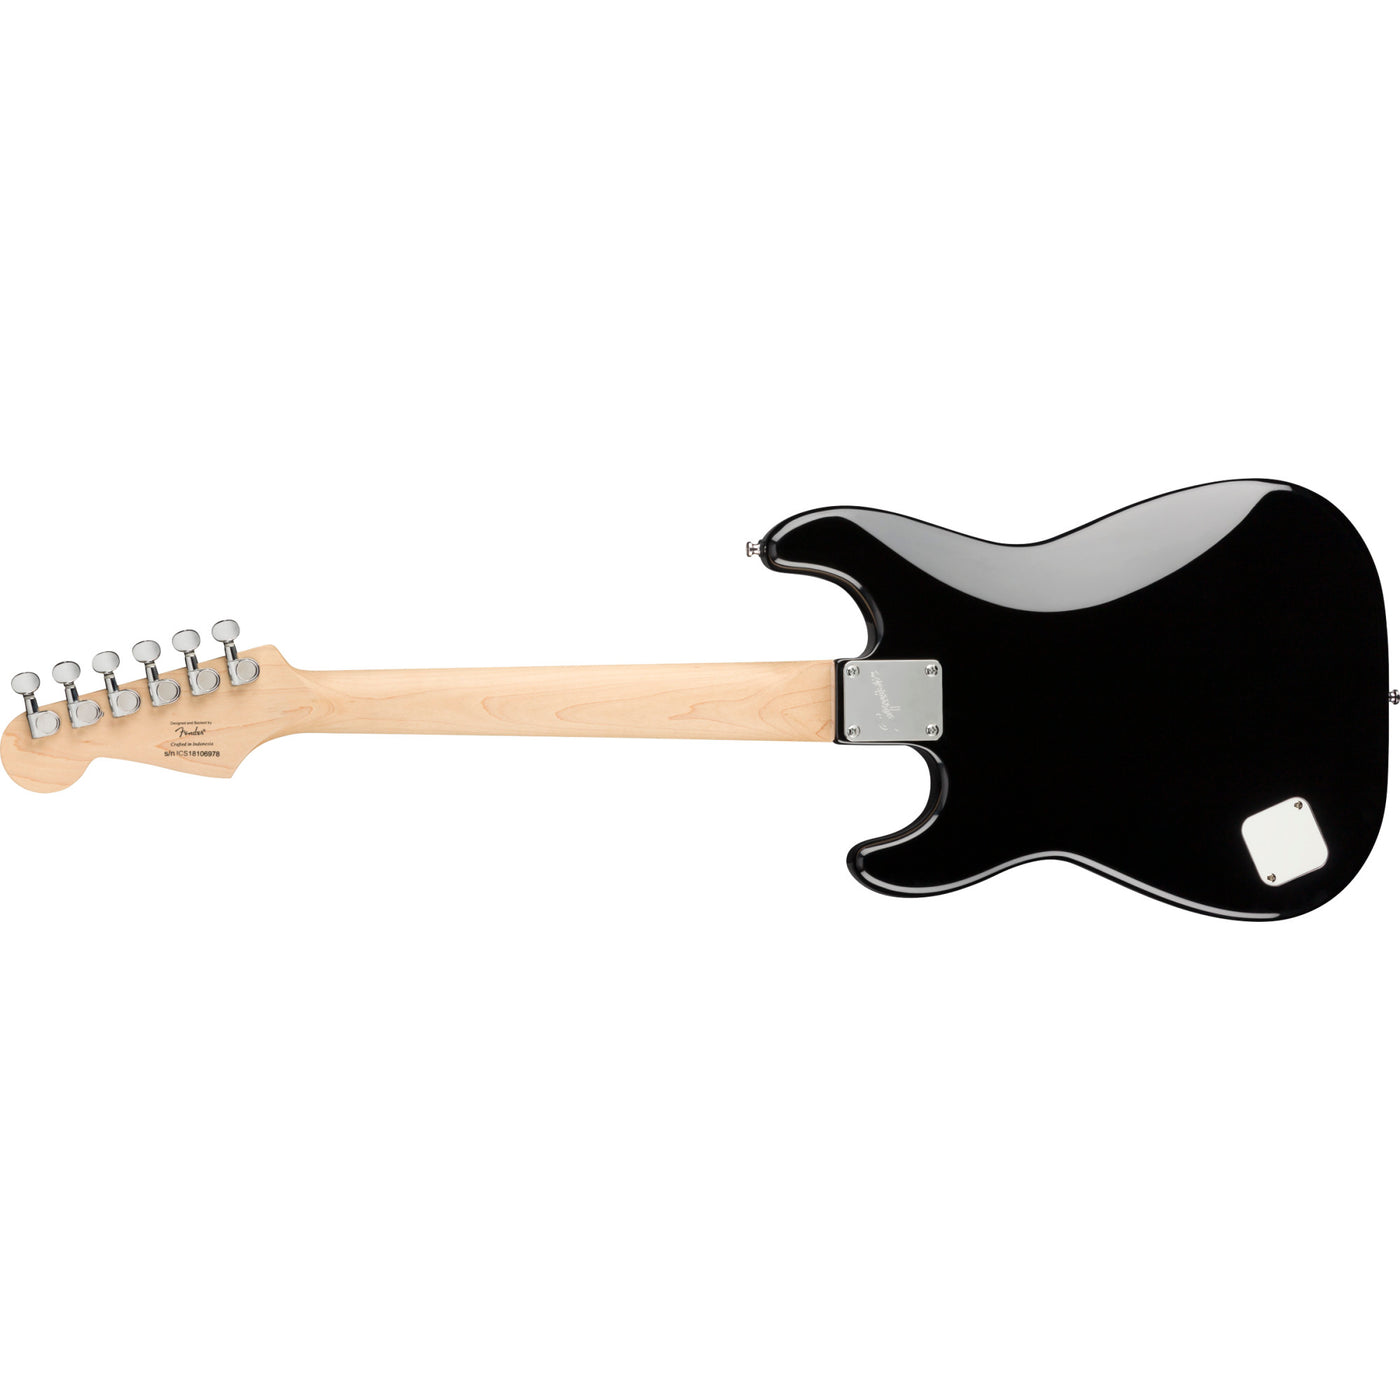 Fender Squier Mini Stratocaster Electric Guitar, Black (0370121506)